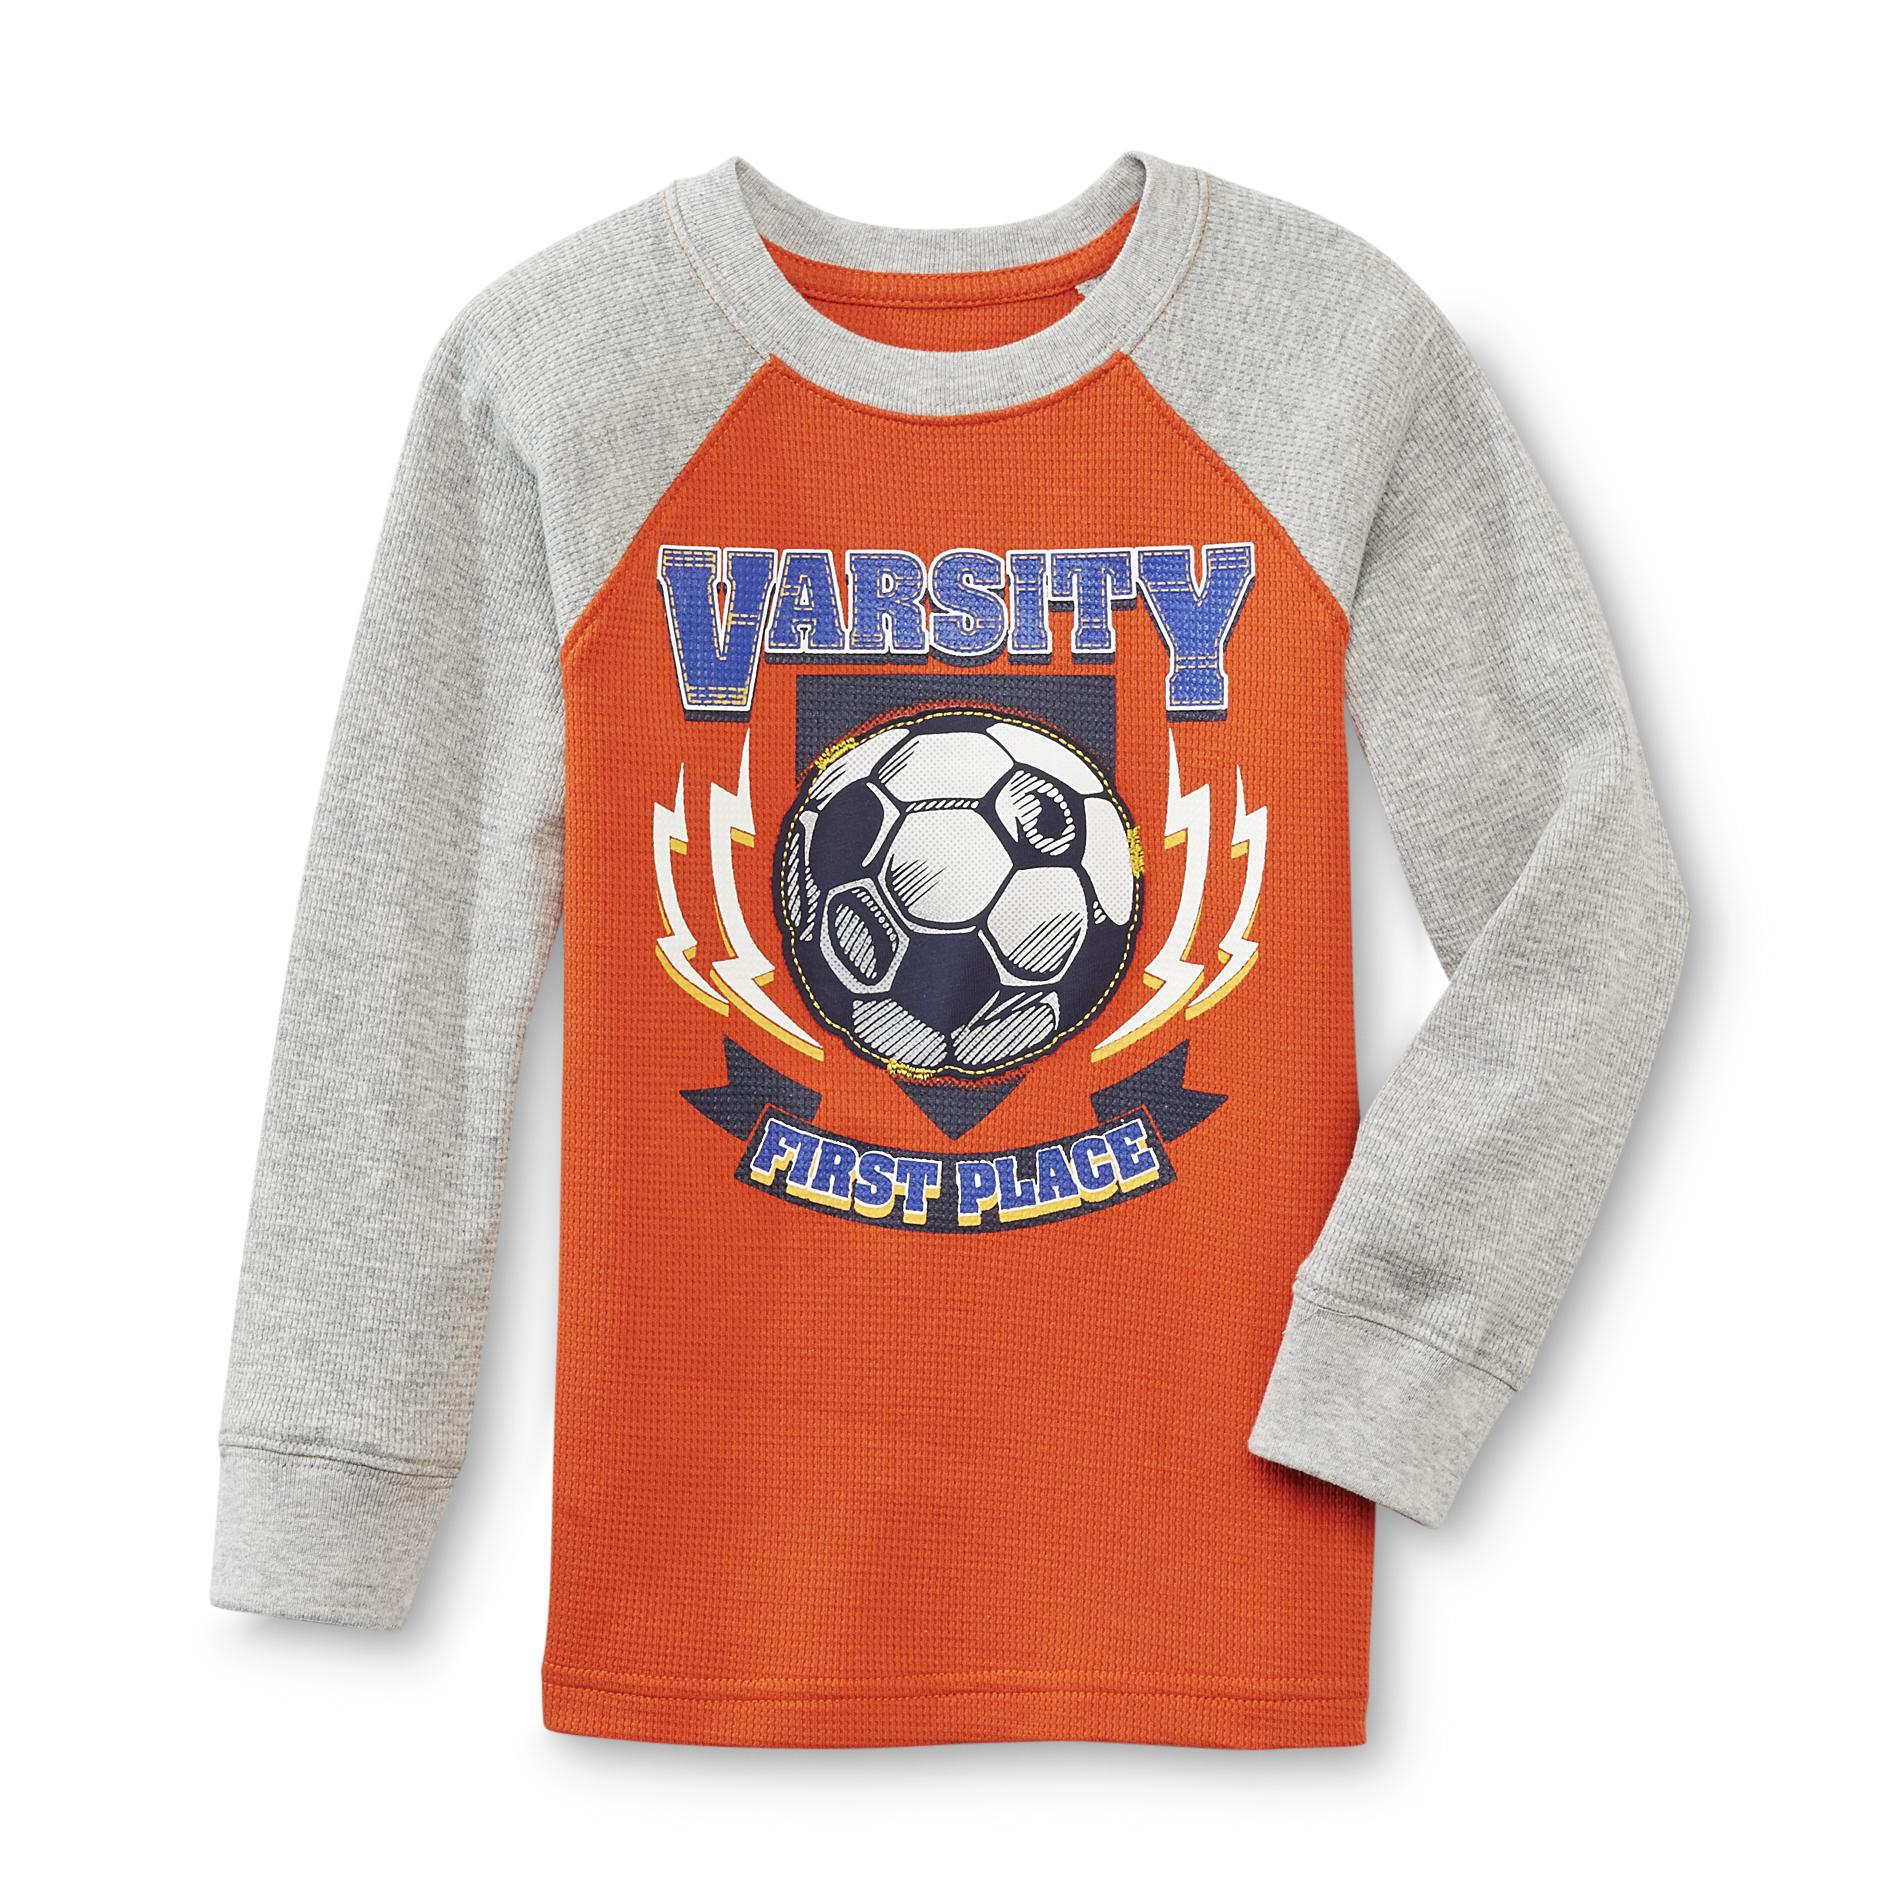 Toughskins Infant & Toddler Boy's Graphic Thermal Shirt - Soccer